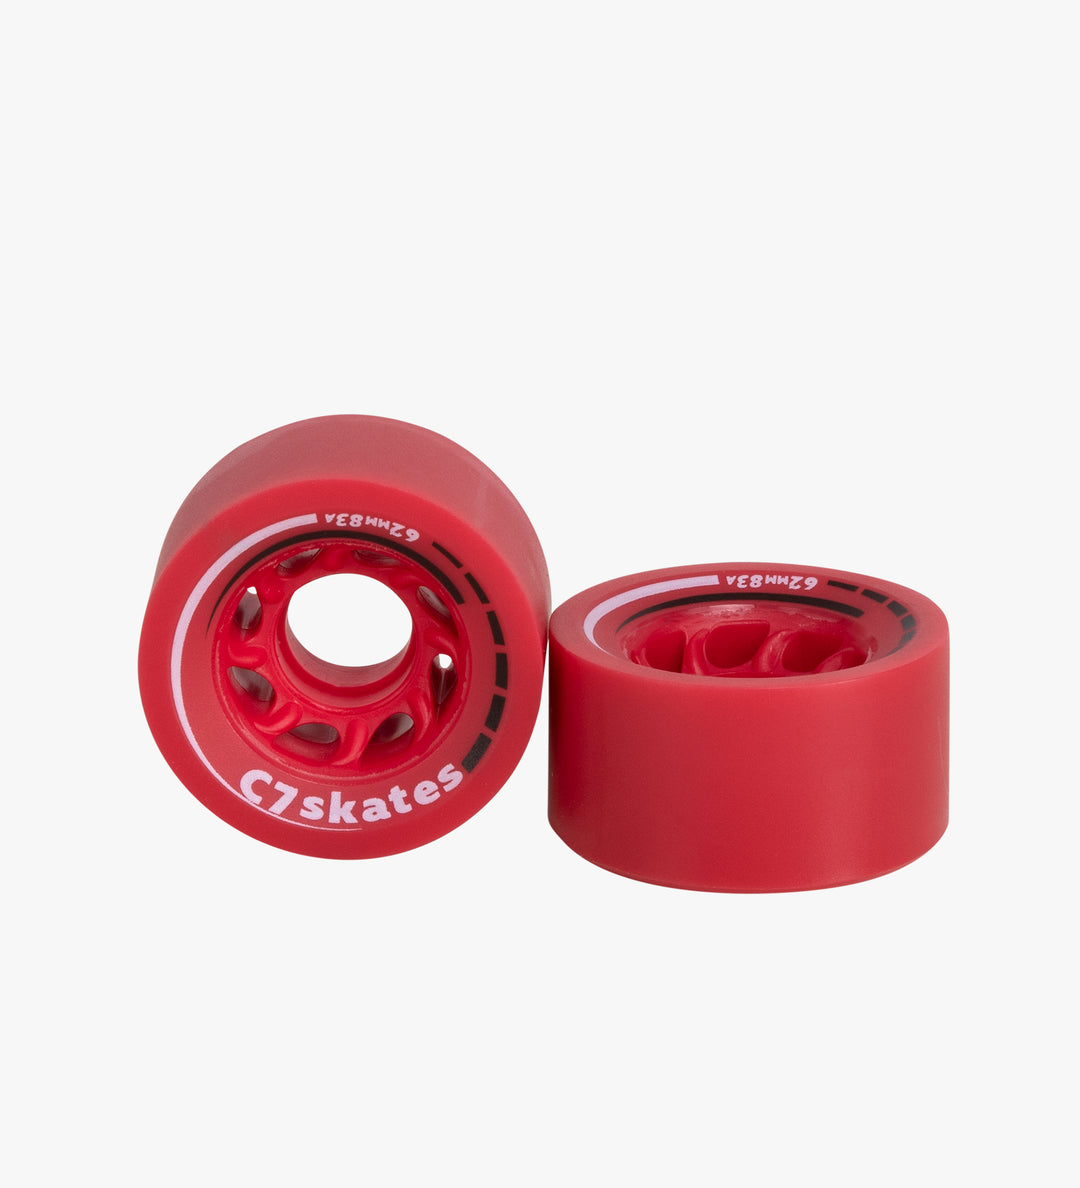 C7skates Cherrypop dark red 62mm roller skate wheels made from durable 83A polyurethane